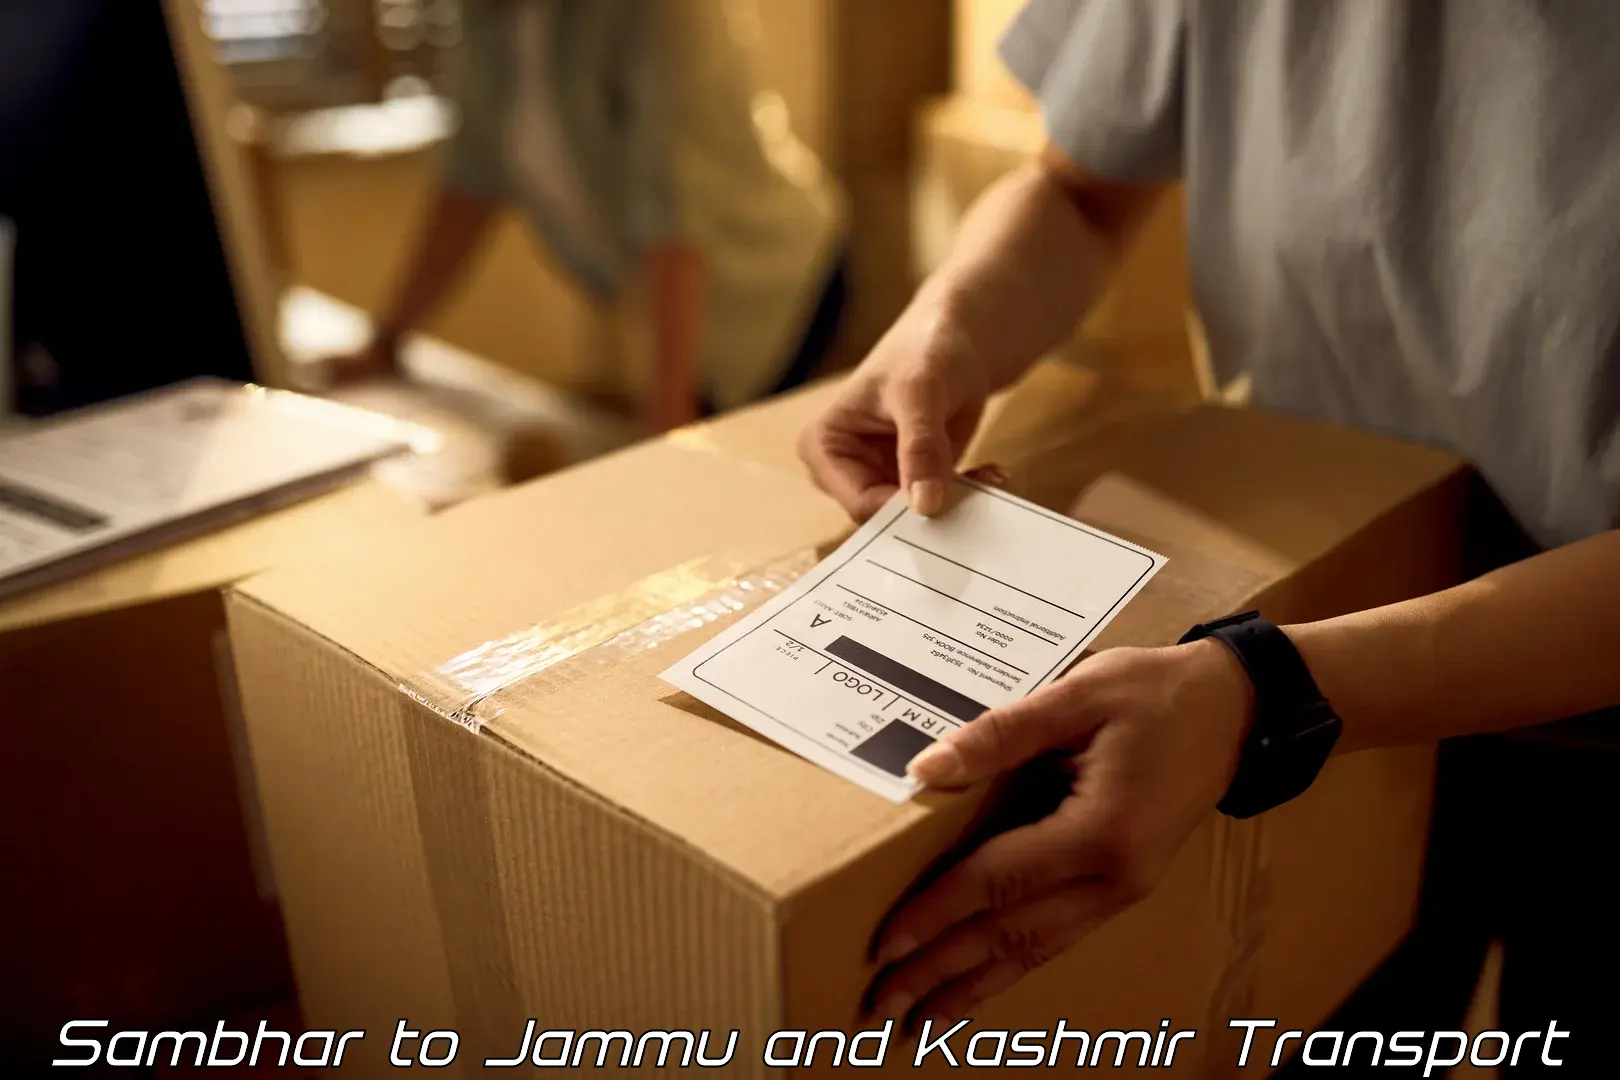 Transport in sharing Sambhar to Jammu and Kashmir